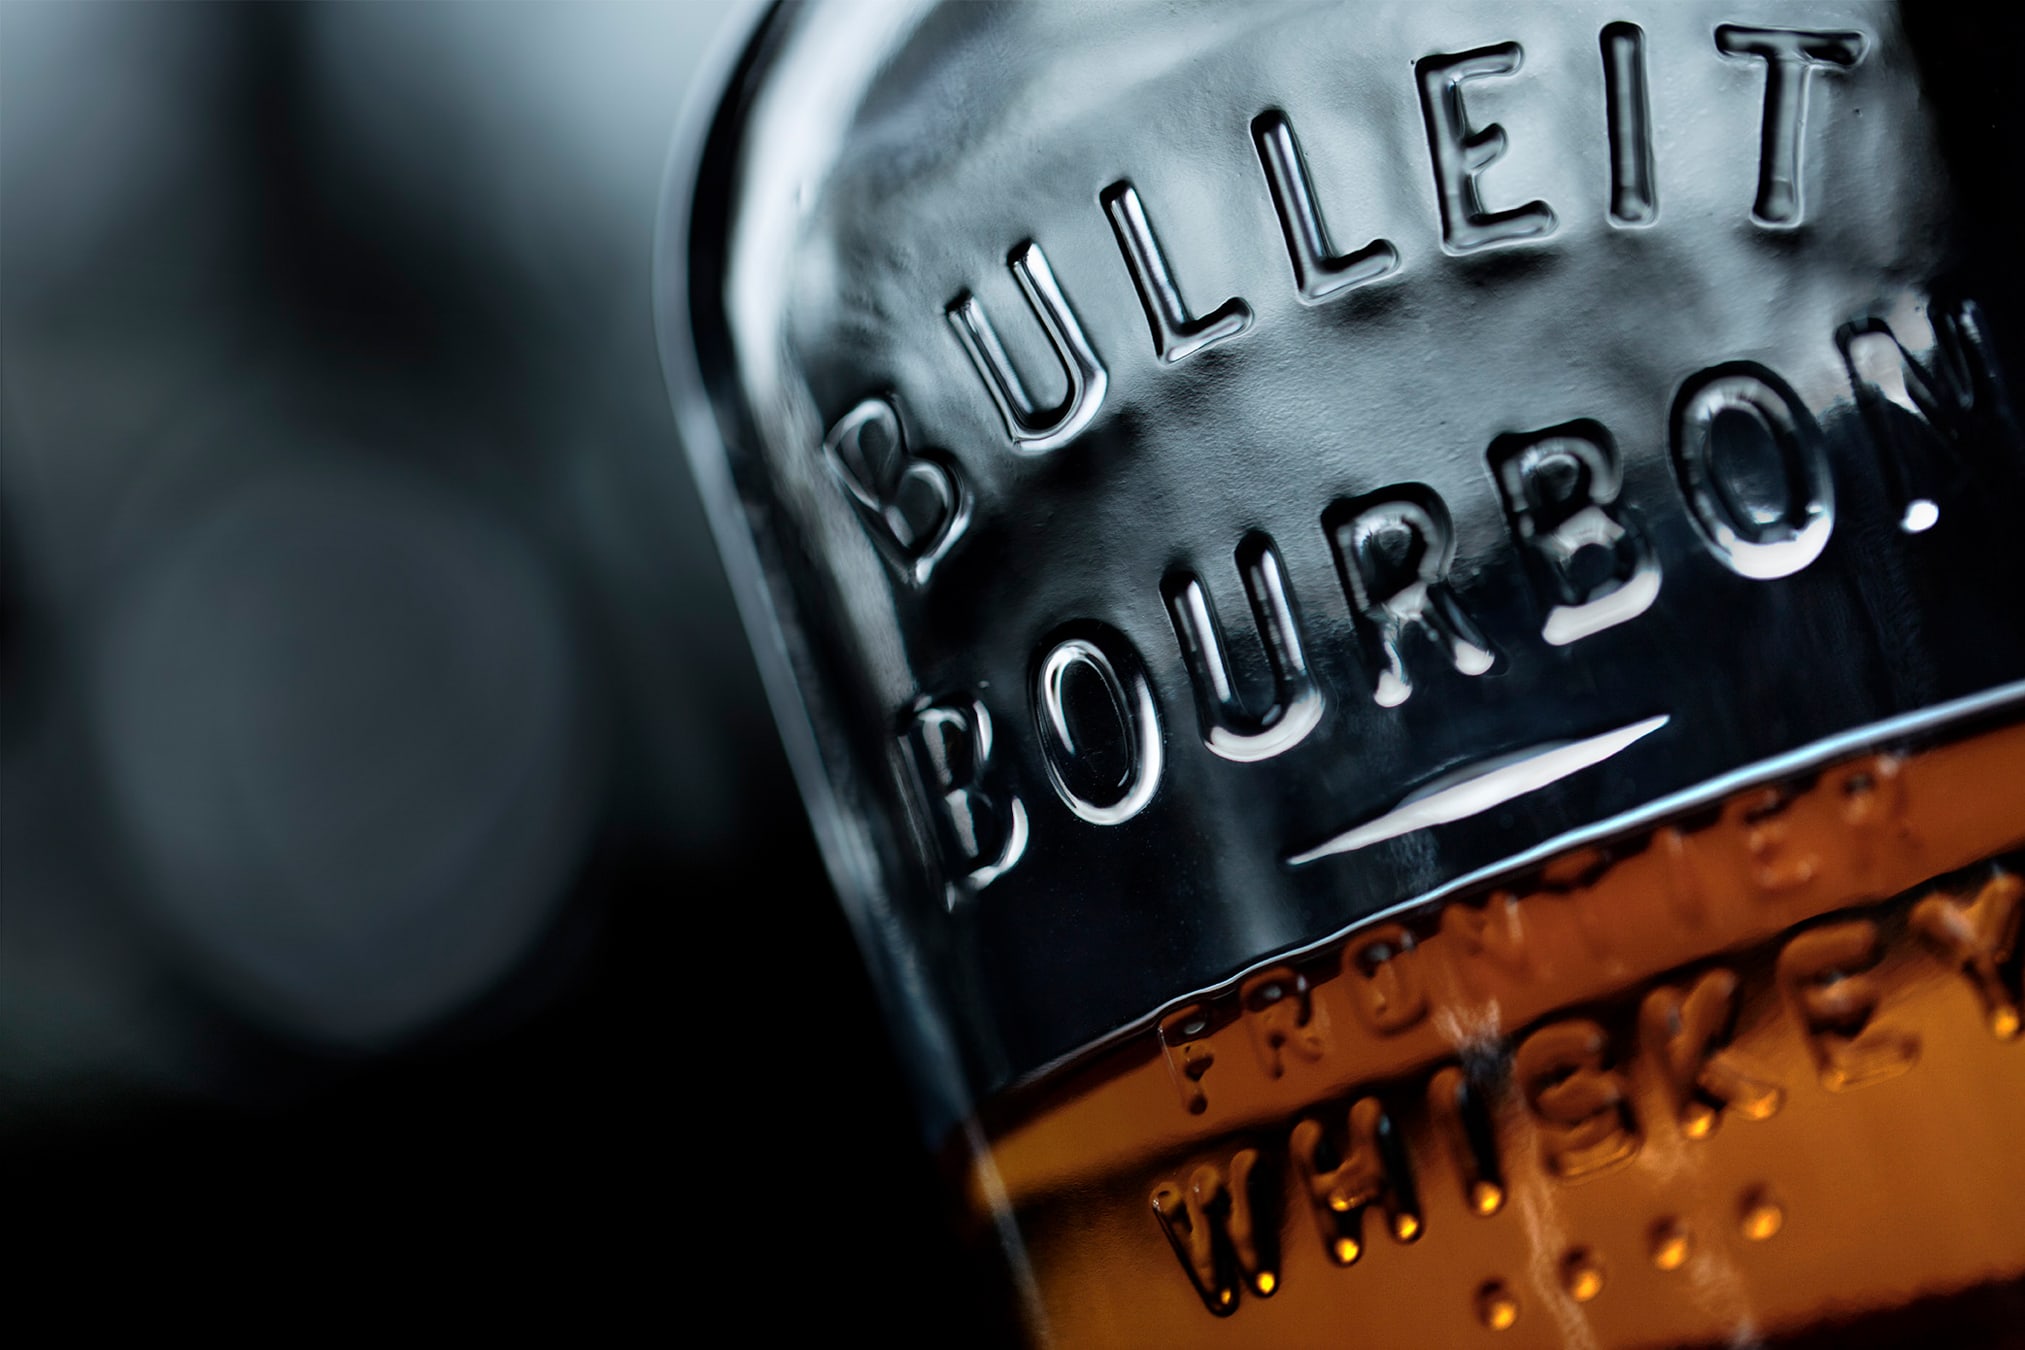 Bulleit Bourbon bottle design detail